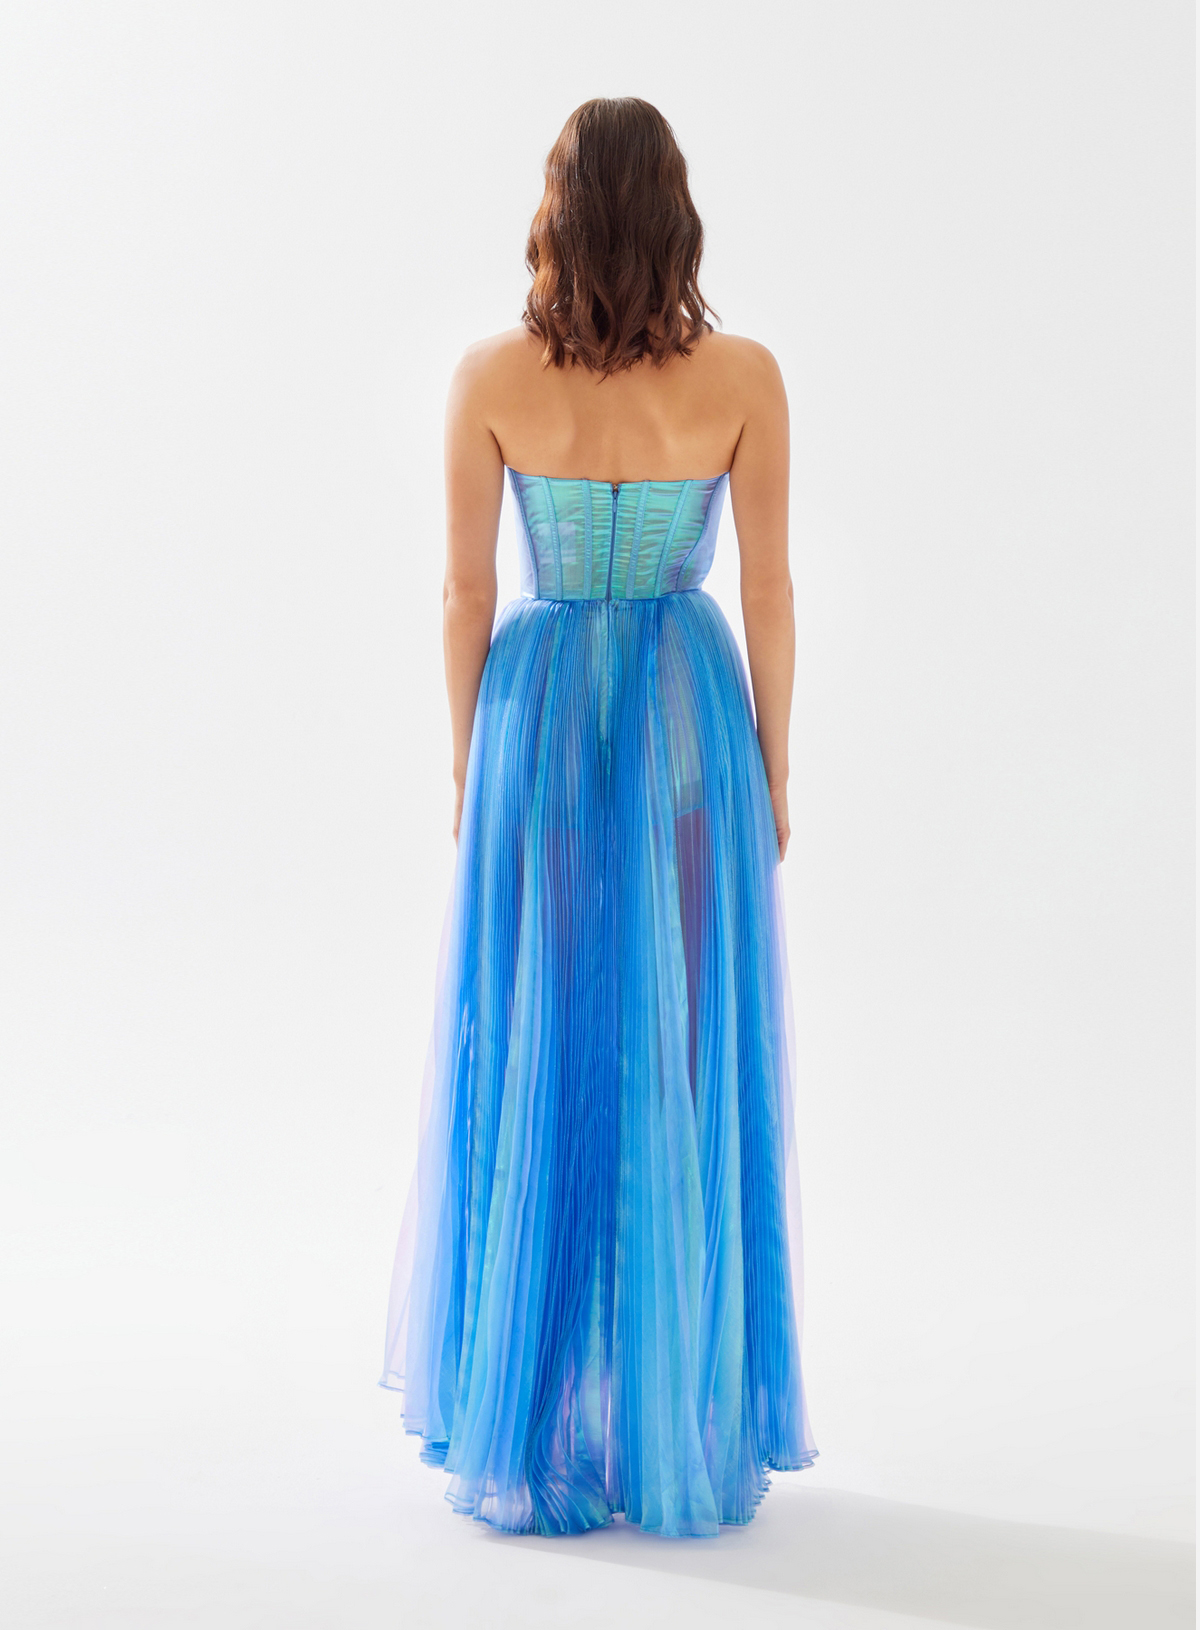 Picture of Edina Blue Dress